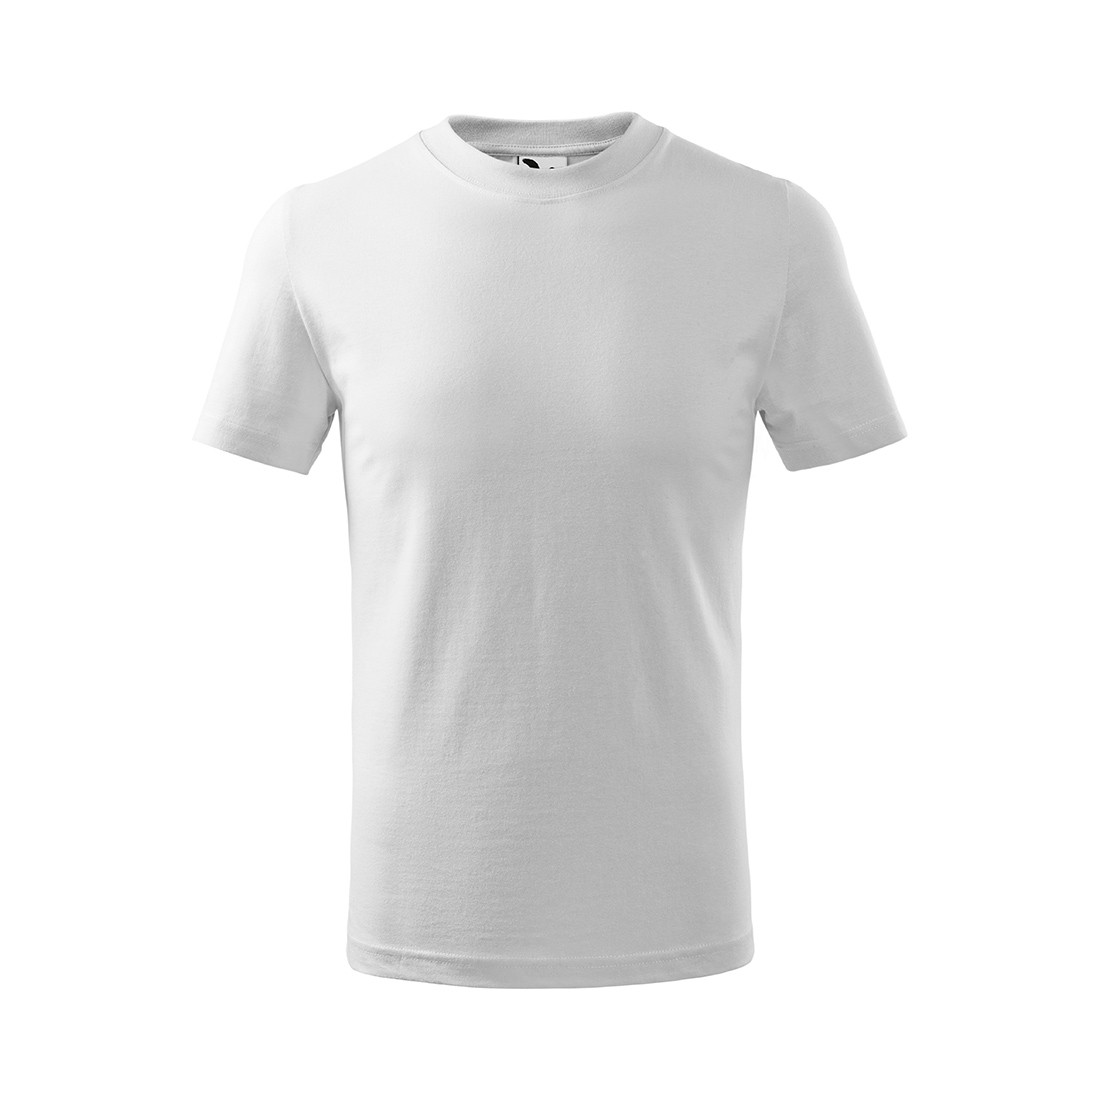 Camiseta ninos BASIC - Ropa de protección